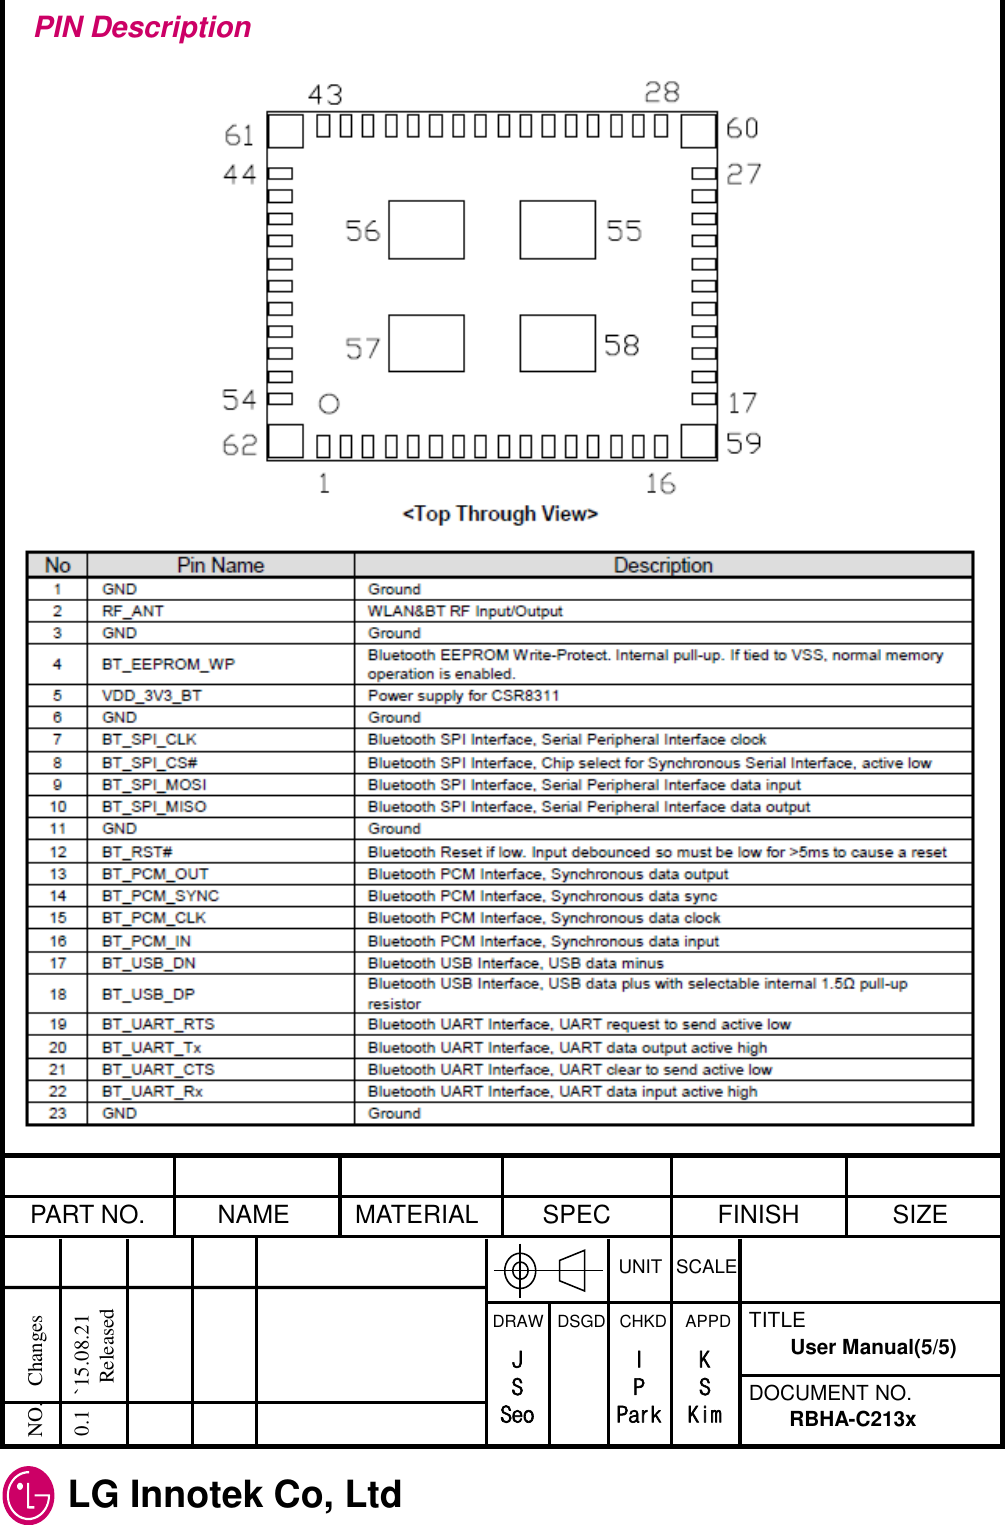  LG Innotek Co, Ltd   PART NO.  NAME  MATERIAL  SPEC  FINISH  SIZE UNIT  SCALE DRAW   DSGD   CHKD    APPD  TITLE DOCUMENT NO. NO.   Changes     0.1   `15.08.21               Released RBHA-C213x User Manual(5/5) J S Seo I P Park K S Kim PIN Description 